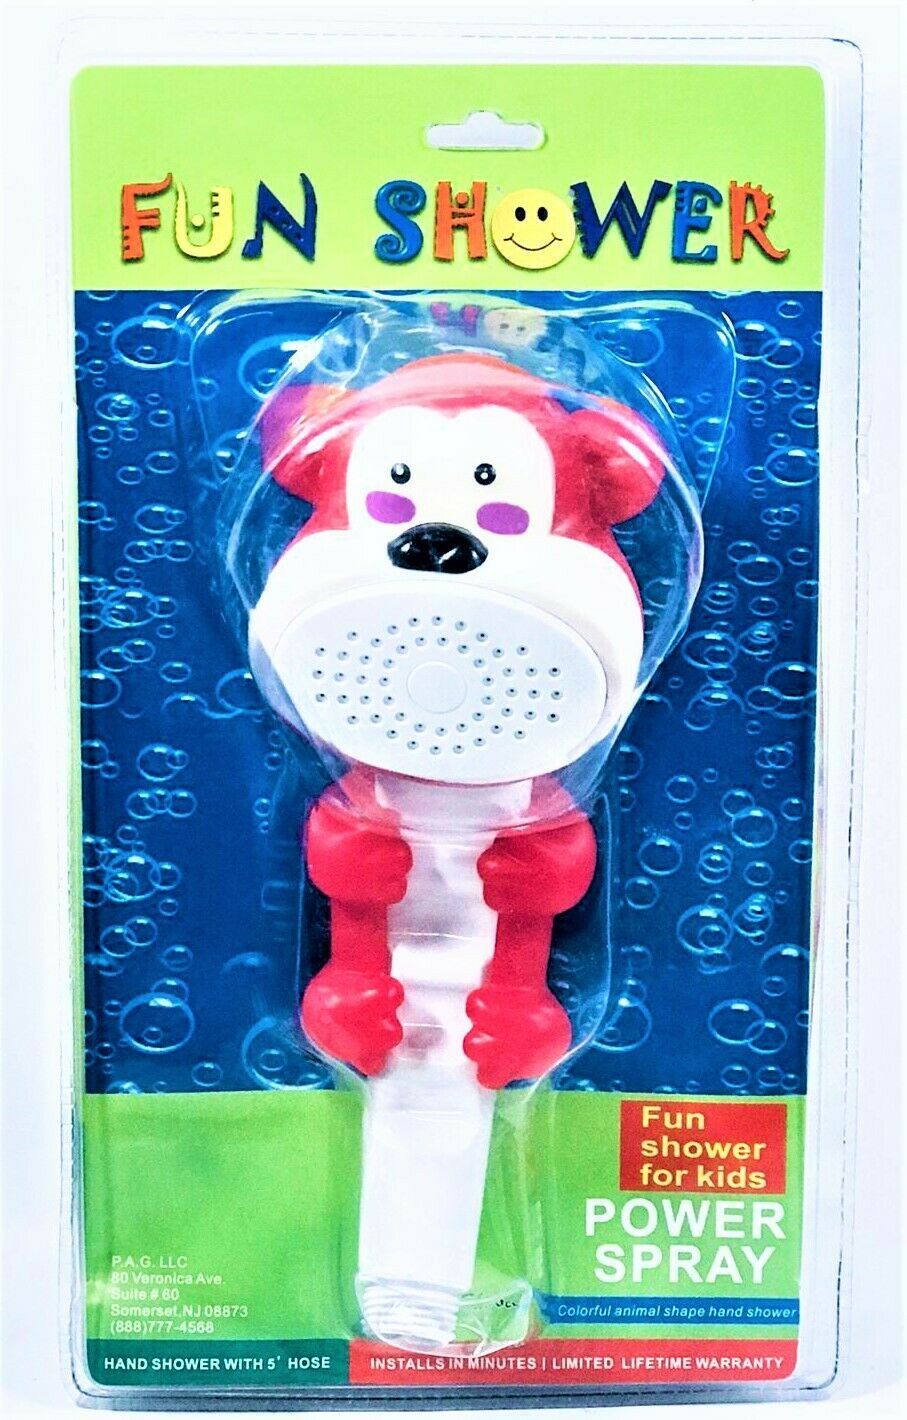 Fun shower power spray for kids-red